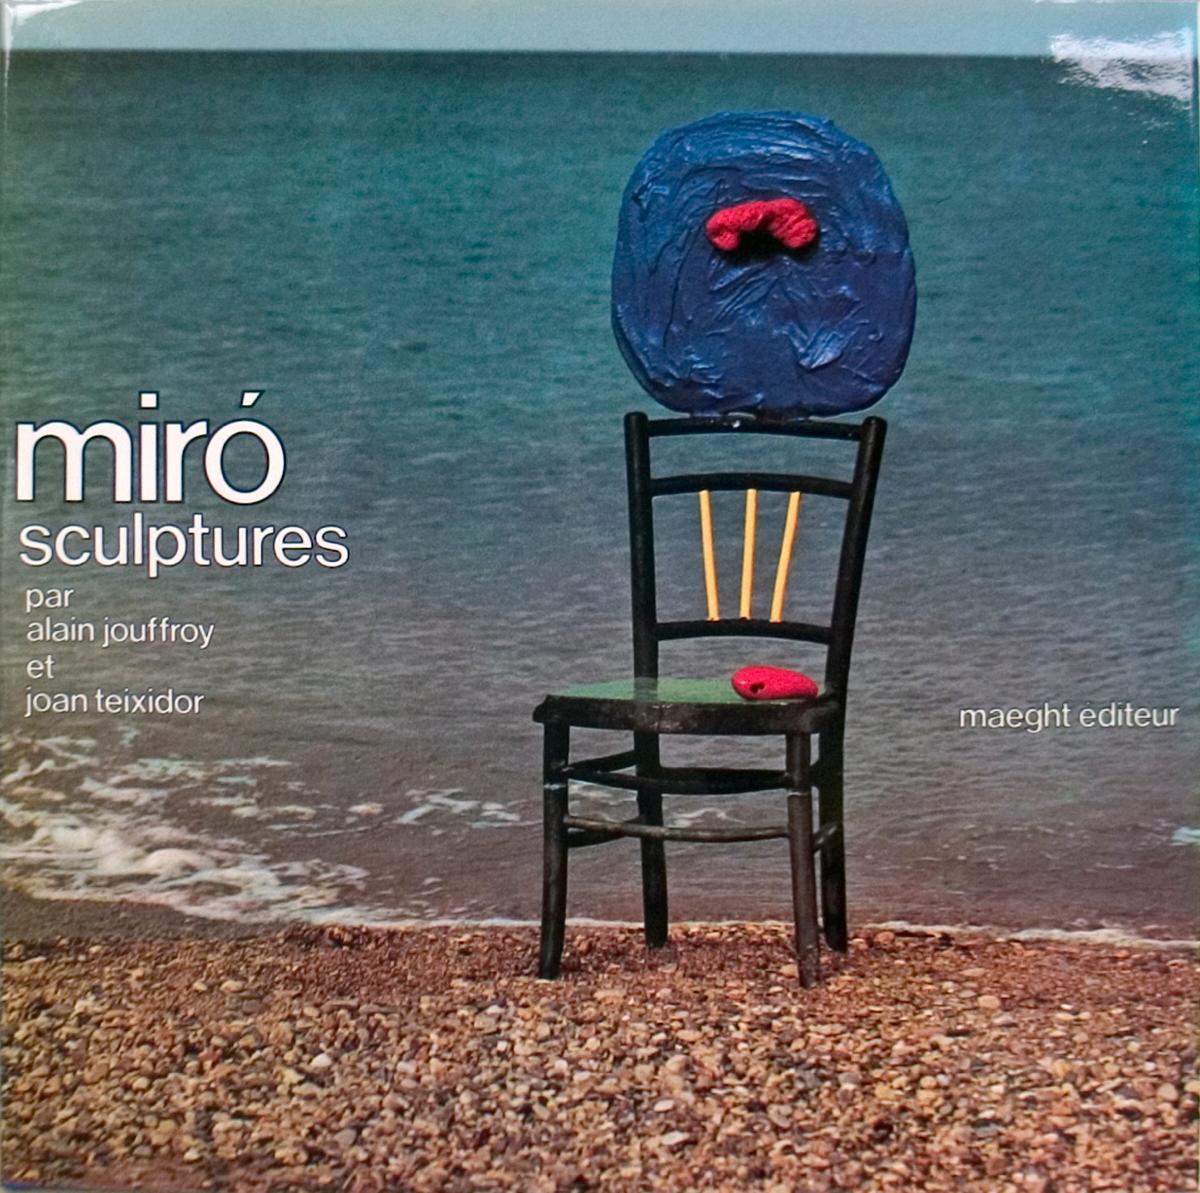 Miro Sculptures - Art by Joan Miró